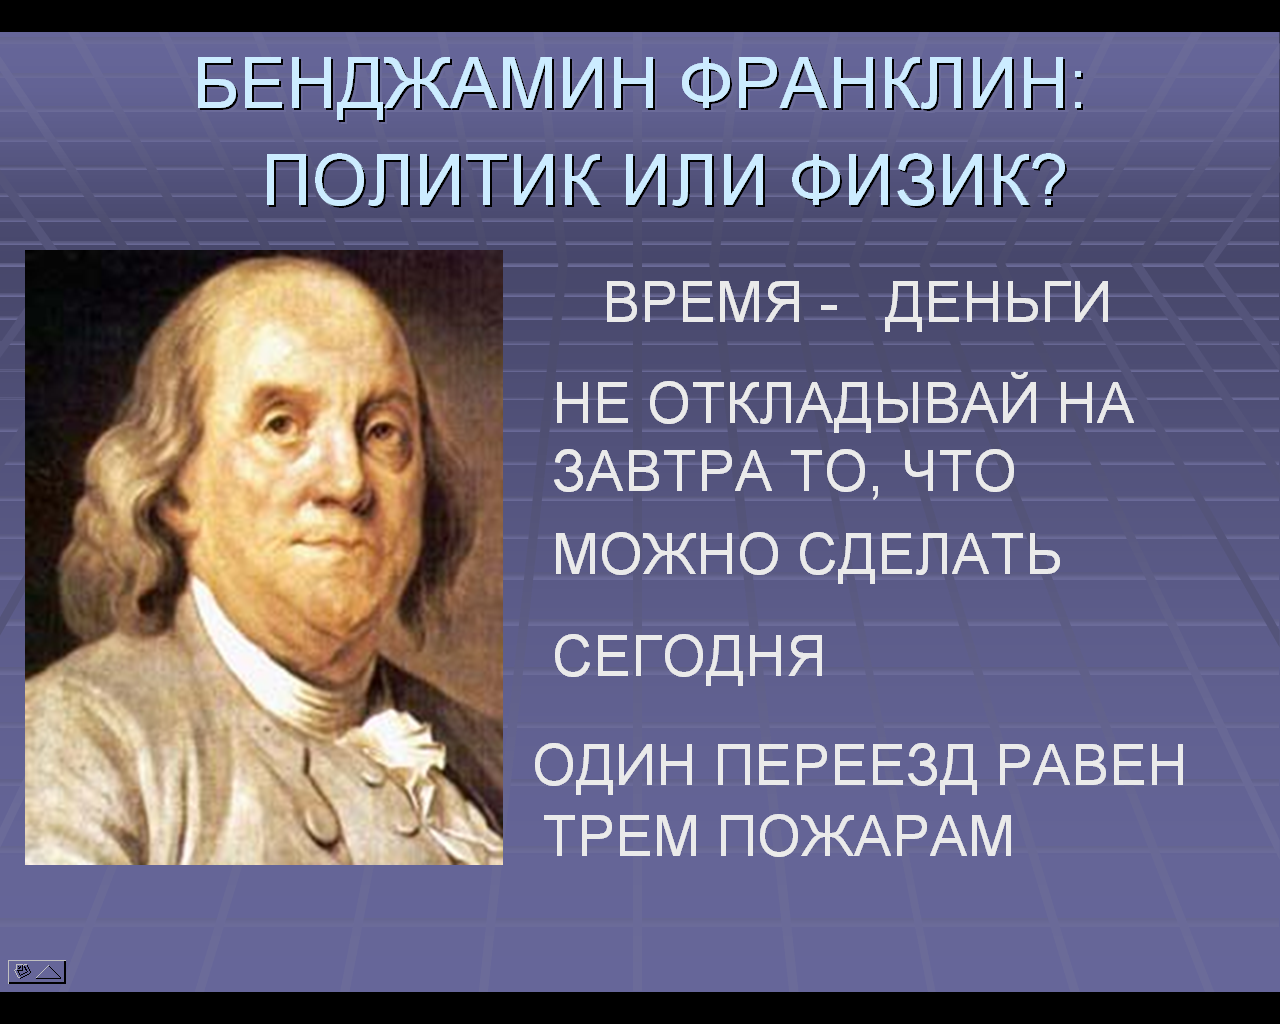 Время деньги франклин. Бенджамин Франклин (1706-1790). Бенджамин Франклин крылатые высказывания. Бенджамин Франклин открытия в физике. Бенджамин Франклин цитаты.